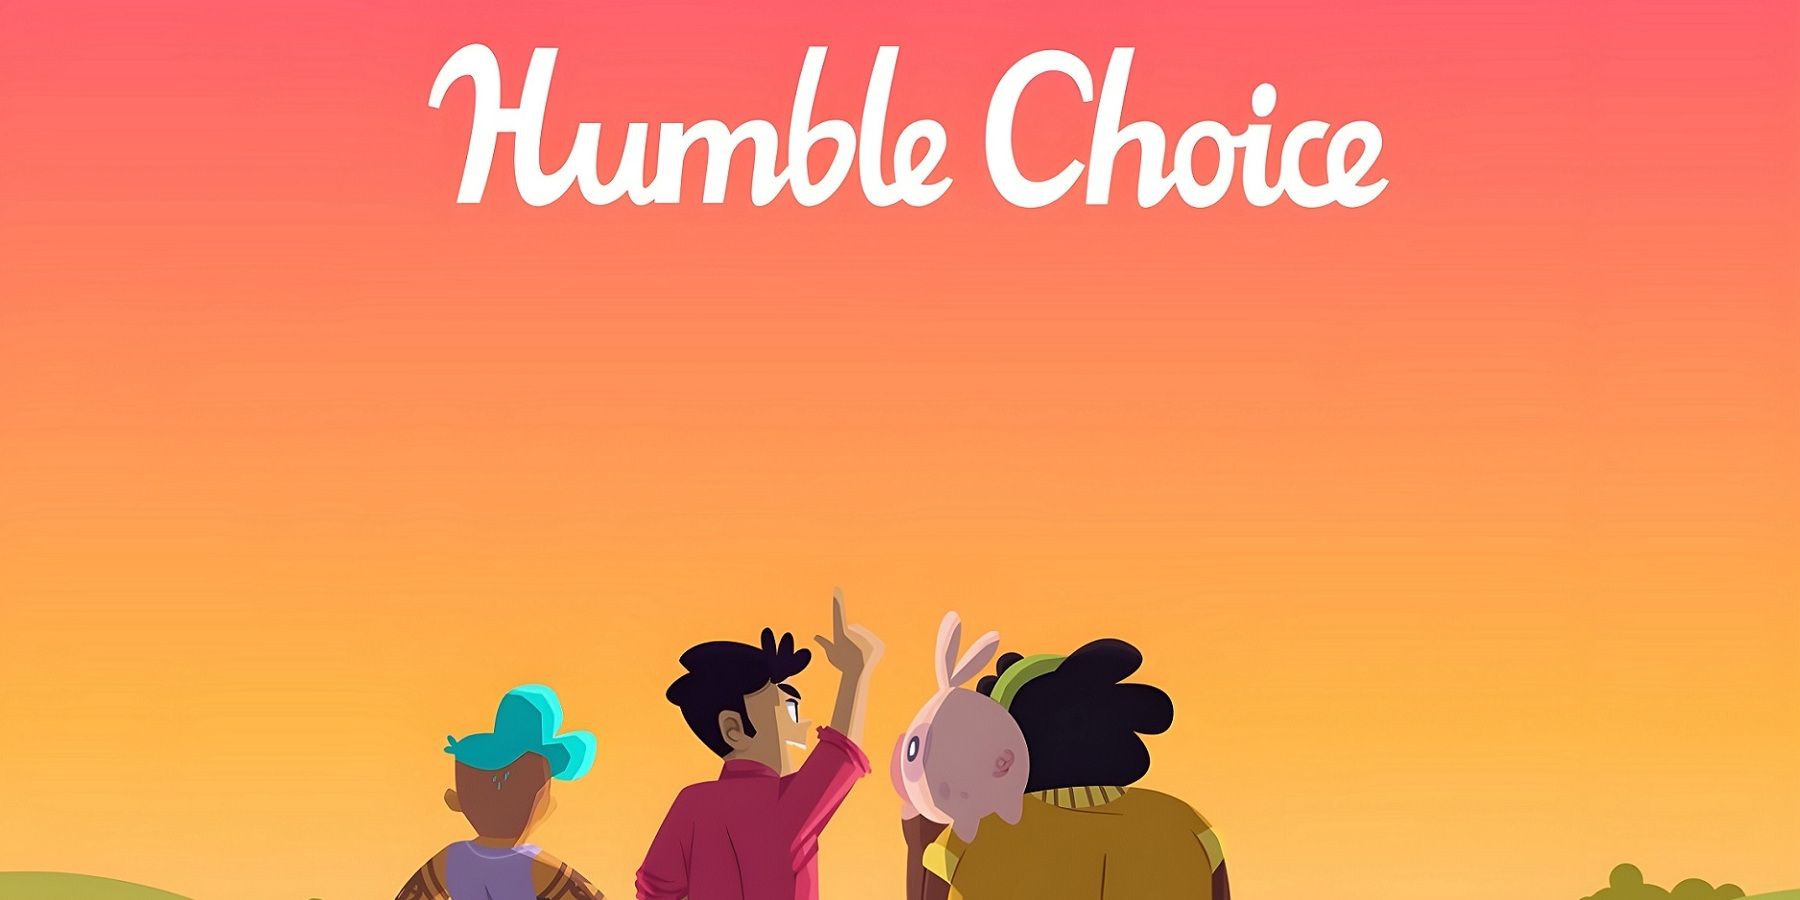 Humble Monthly Bundle - Humble Choice October 2023 - Epic Bundle